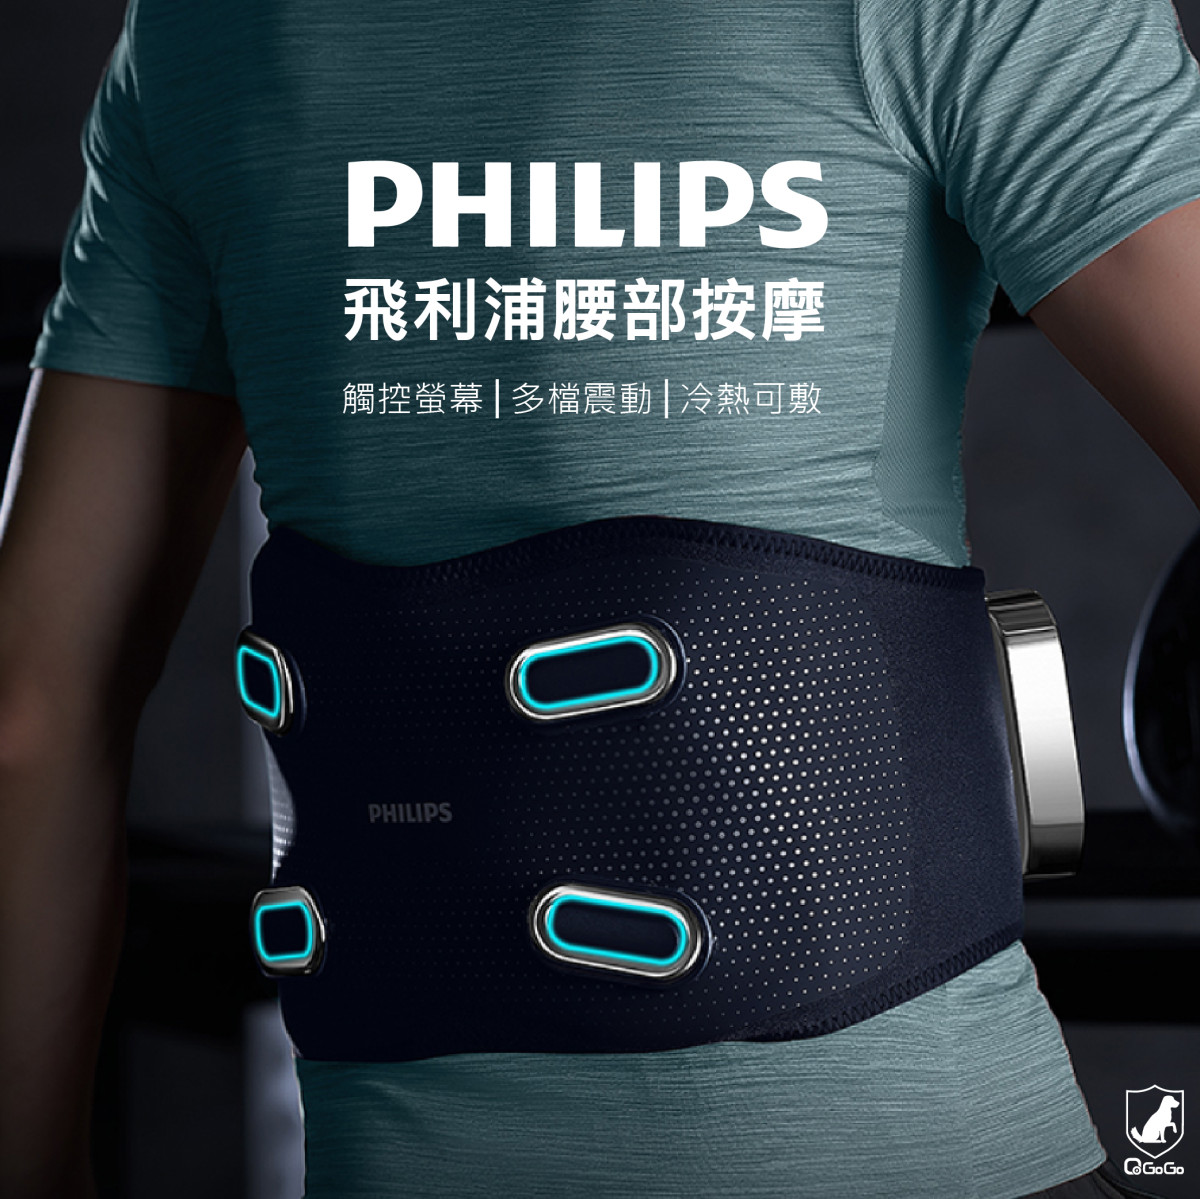 【Philips飛利浦】震動波腰部按摩器 支援冷熱敷 觸控螢幕操控 多檔可調